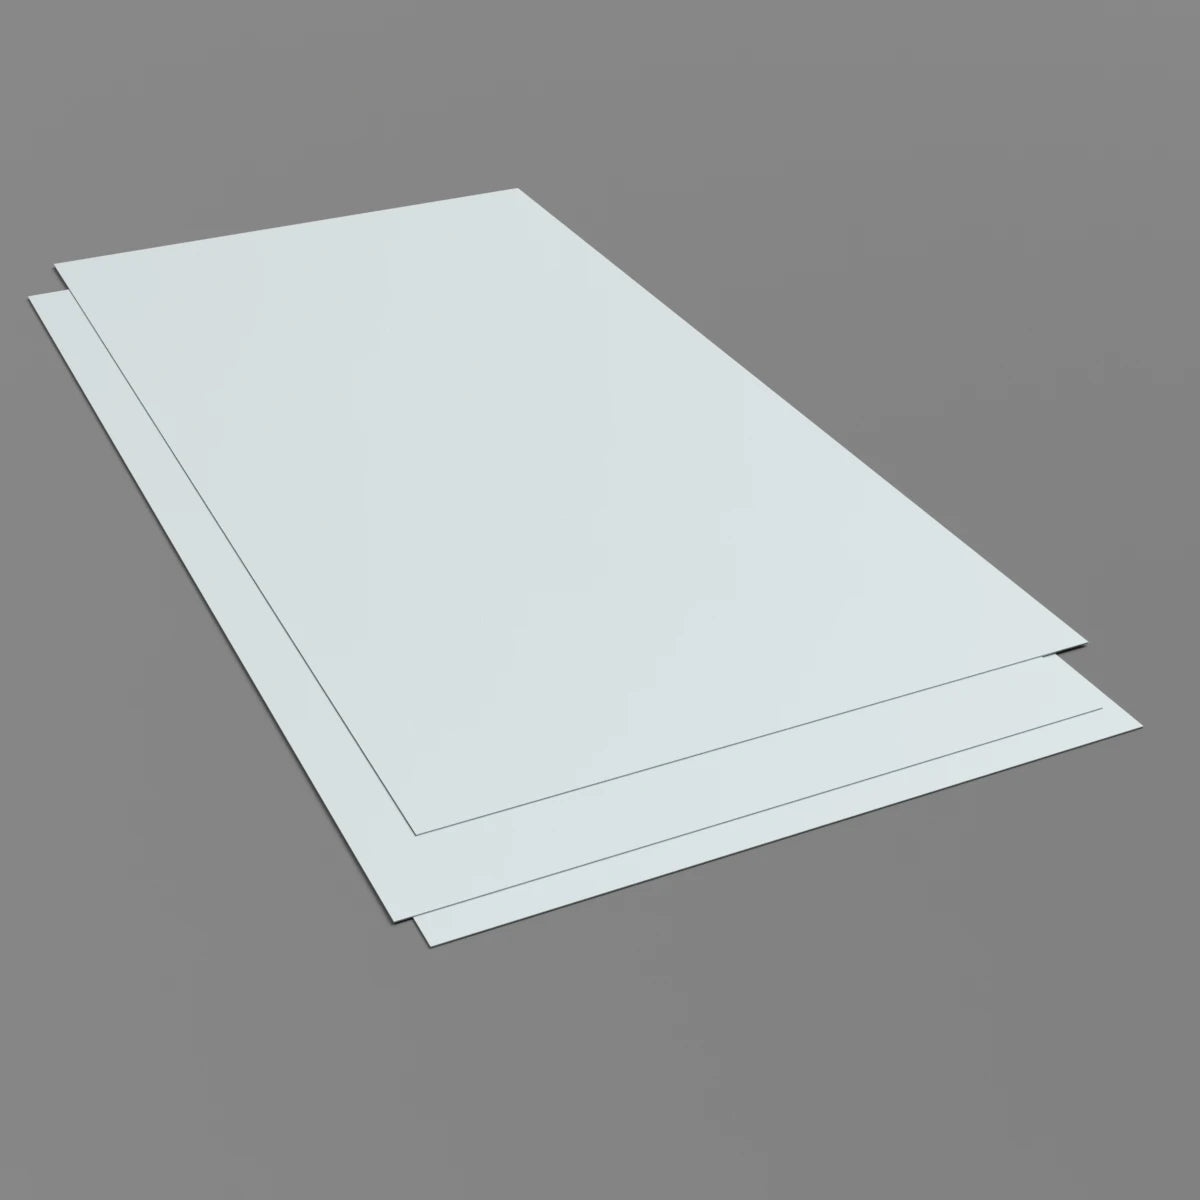 2.5mm Cesco Hygienic Wall Cladding Sheet